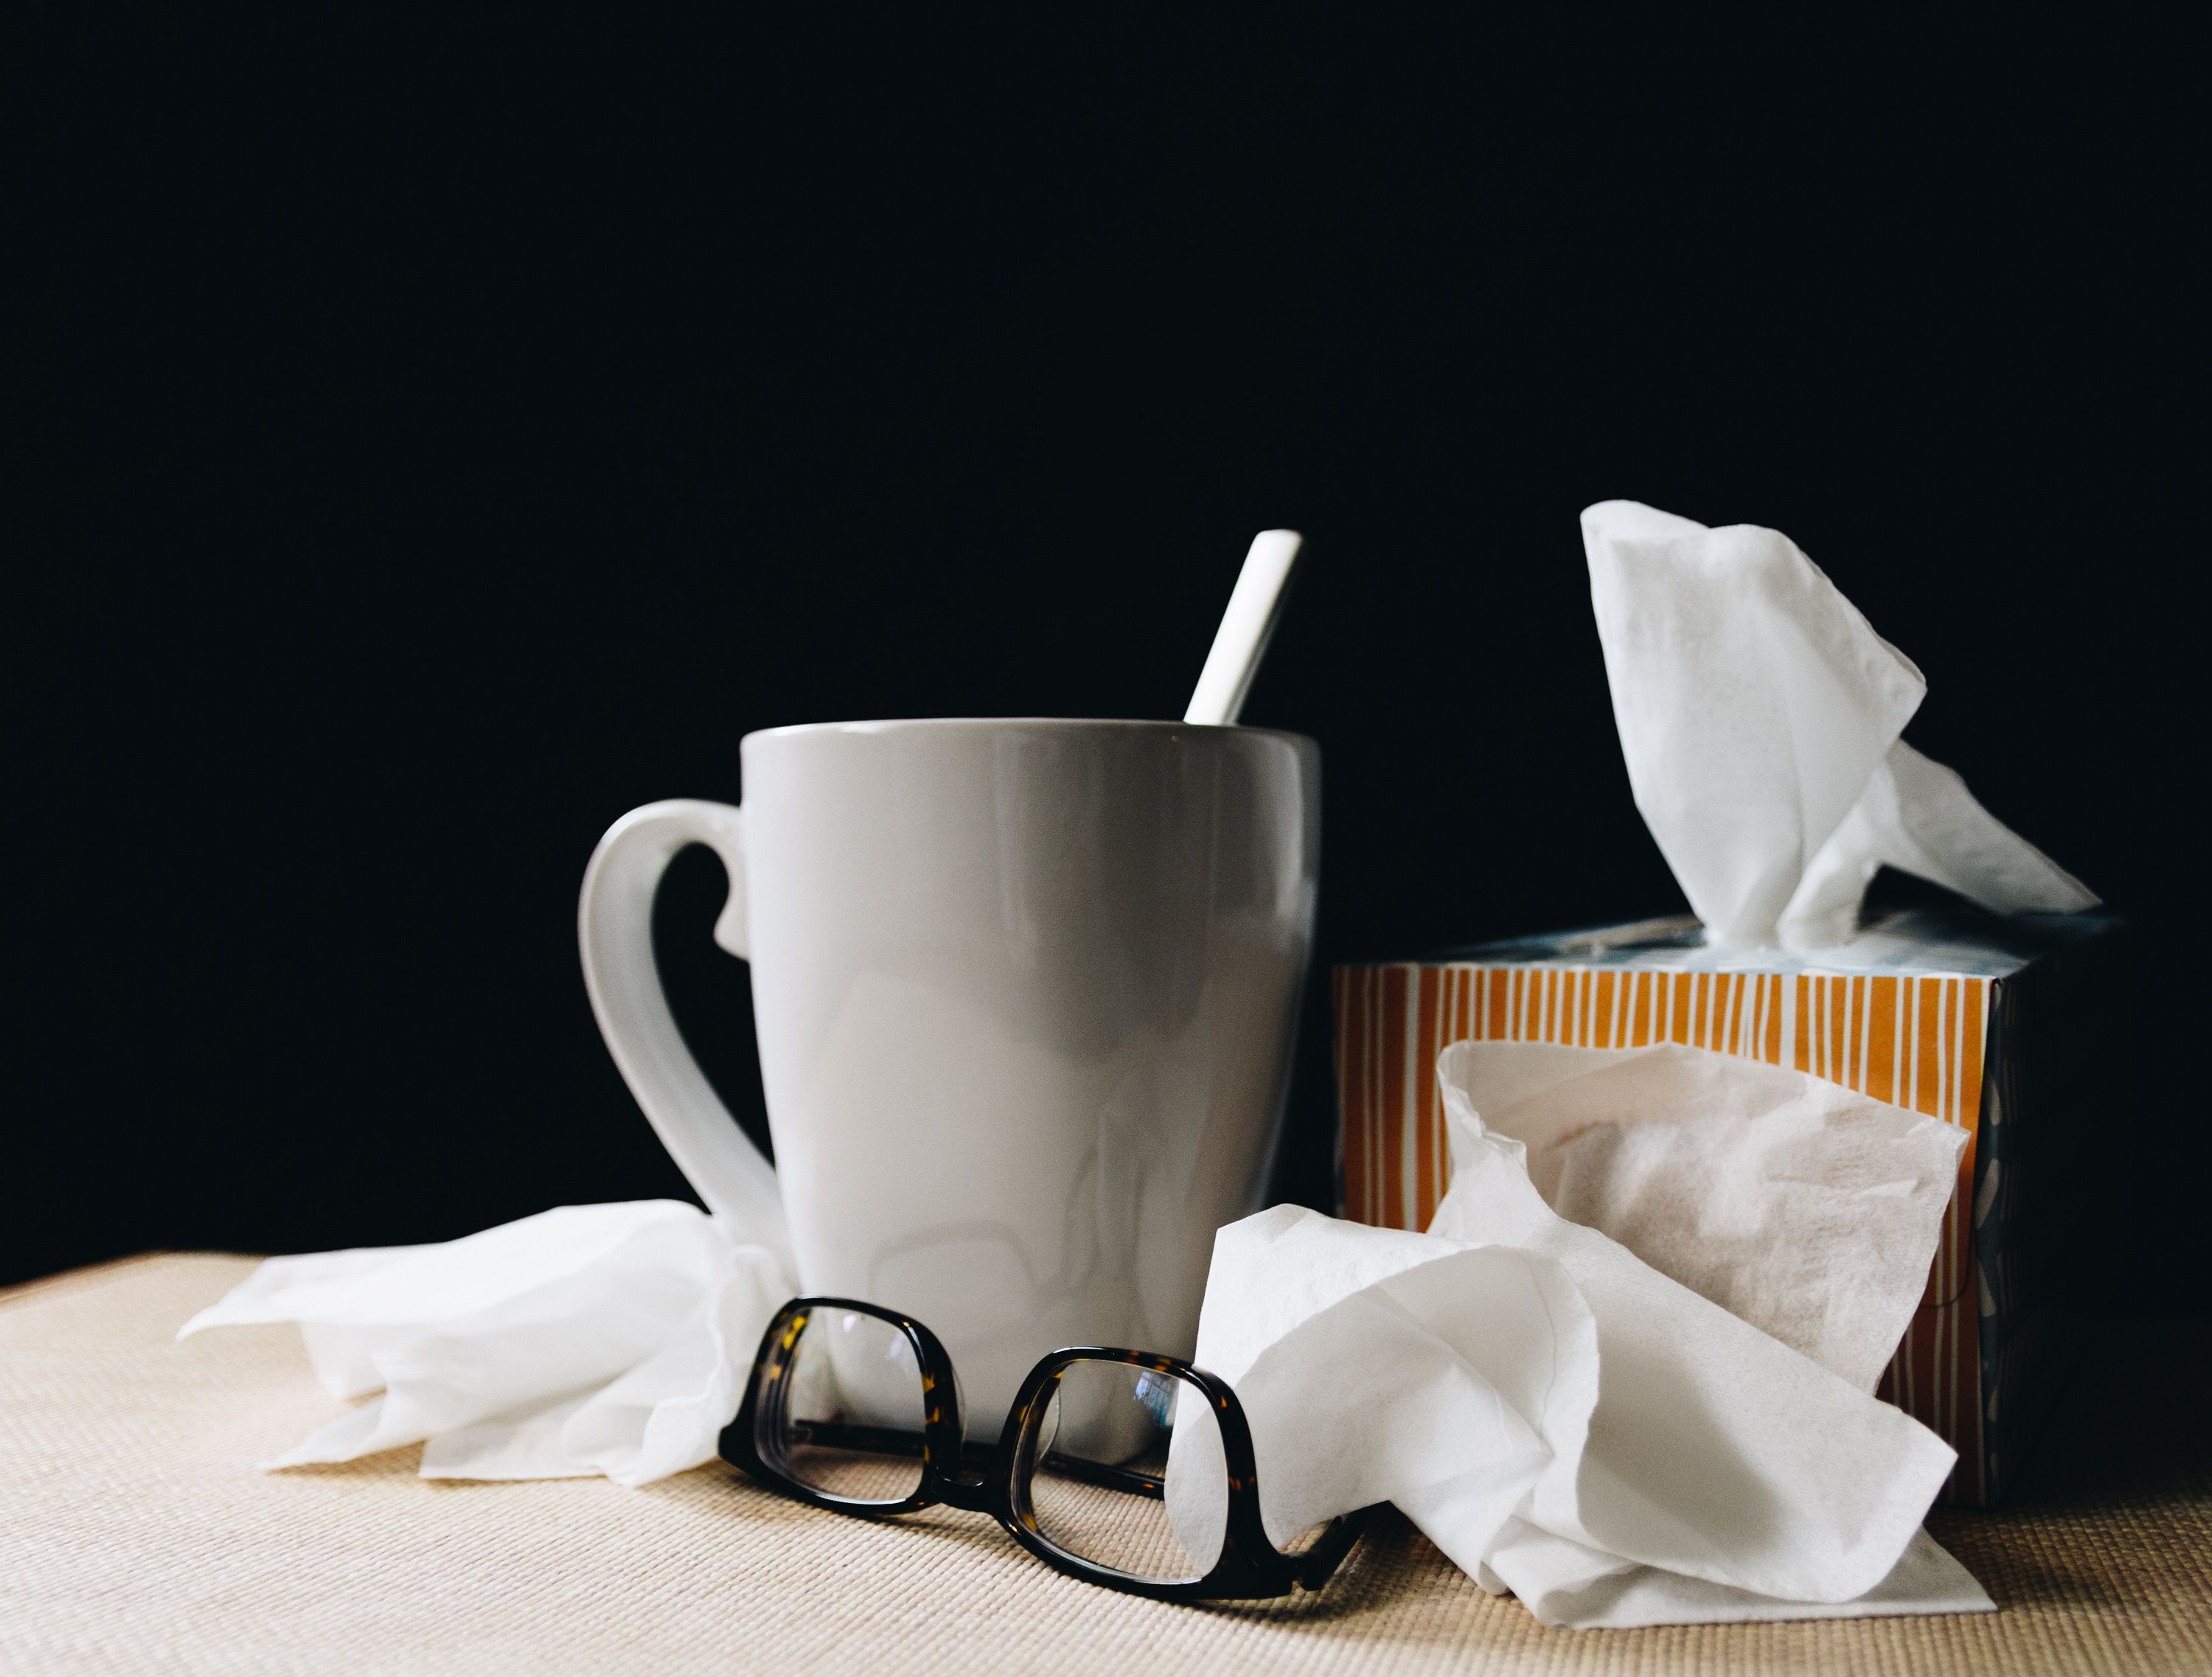 Flu Shot: Cutaneous Administration Improves Efficacy